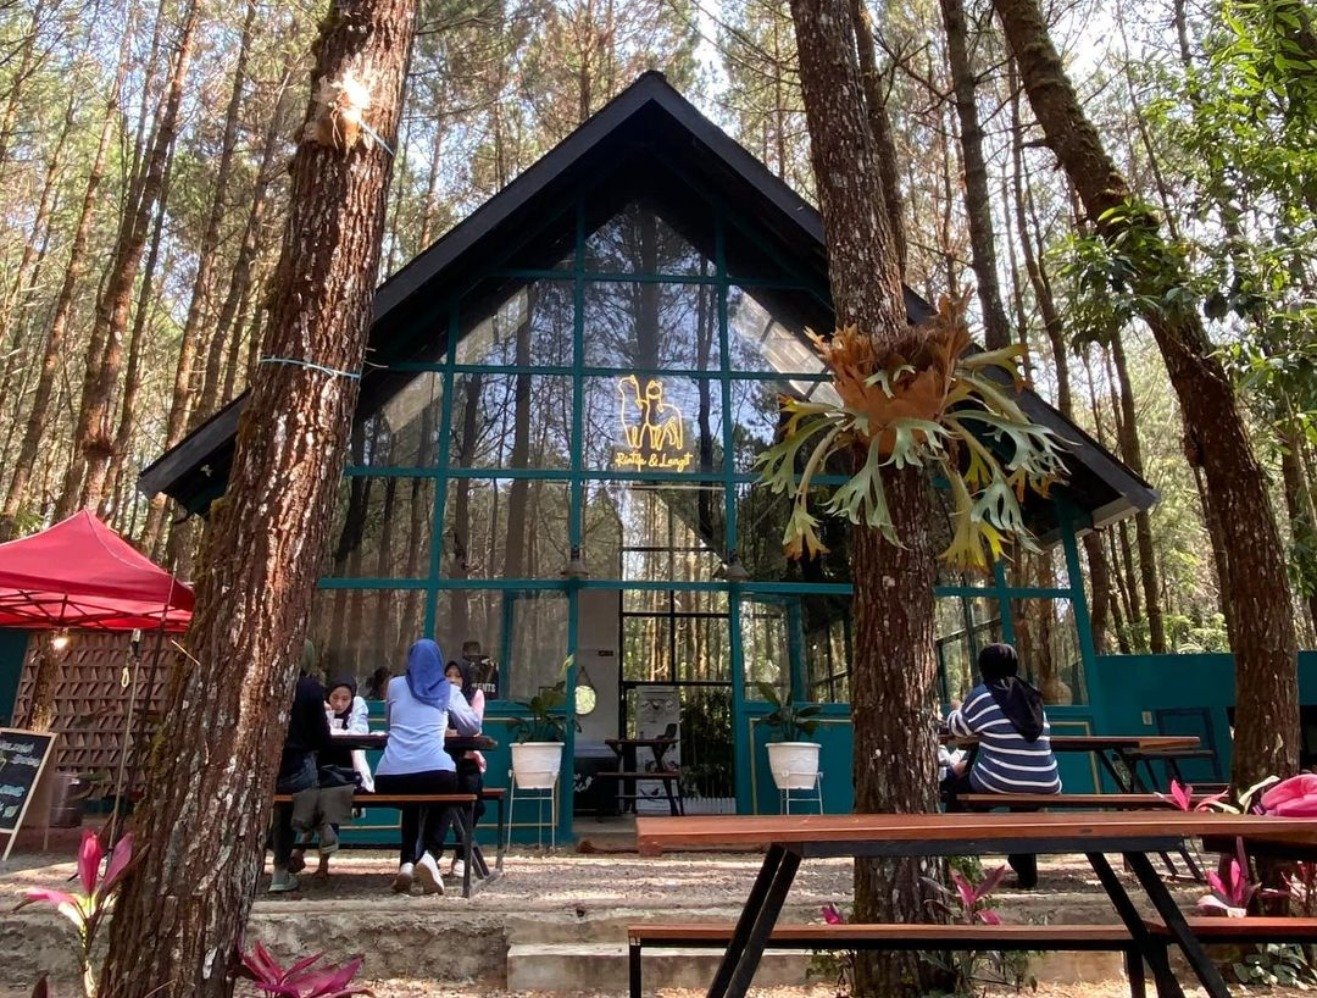 Tangkal Pinus Jayagiri (Sumber gambar: Instagram.com/@tangkalpinus)